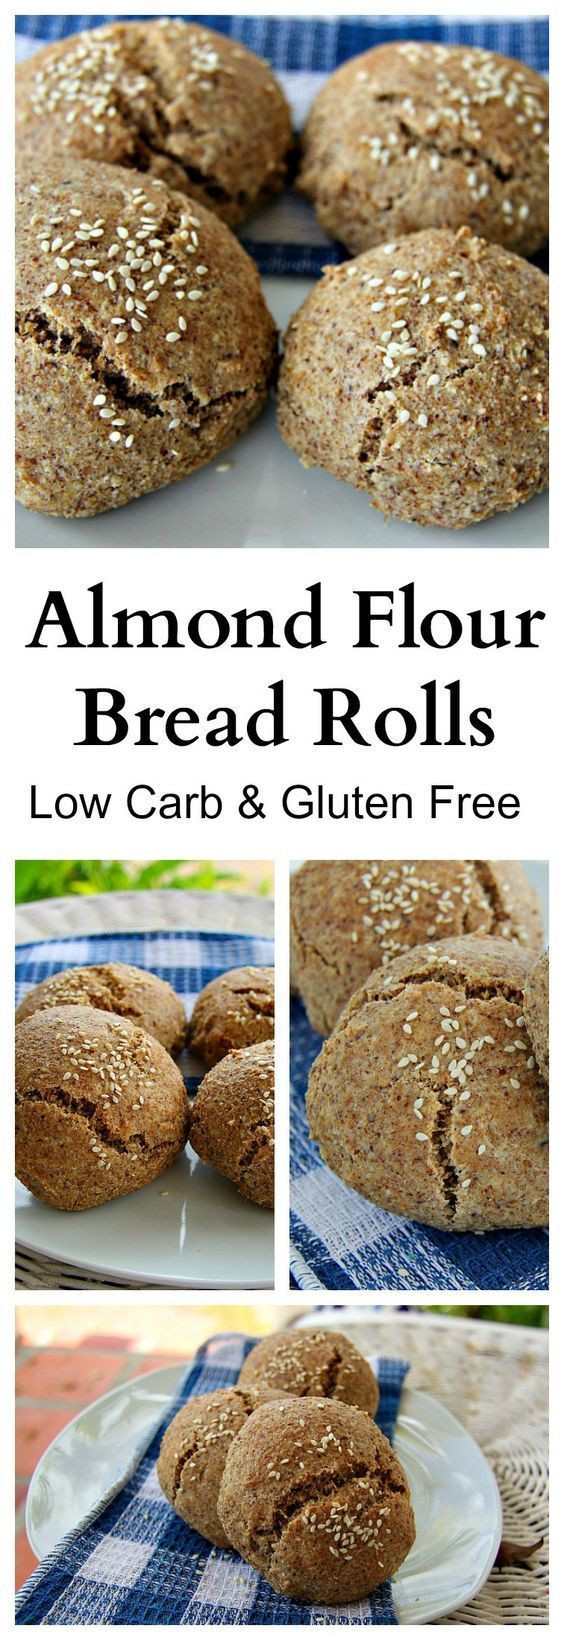 Vegan Keto Bread Almond Flour
 119 best images about Primal Paleo Breads on Pinterest